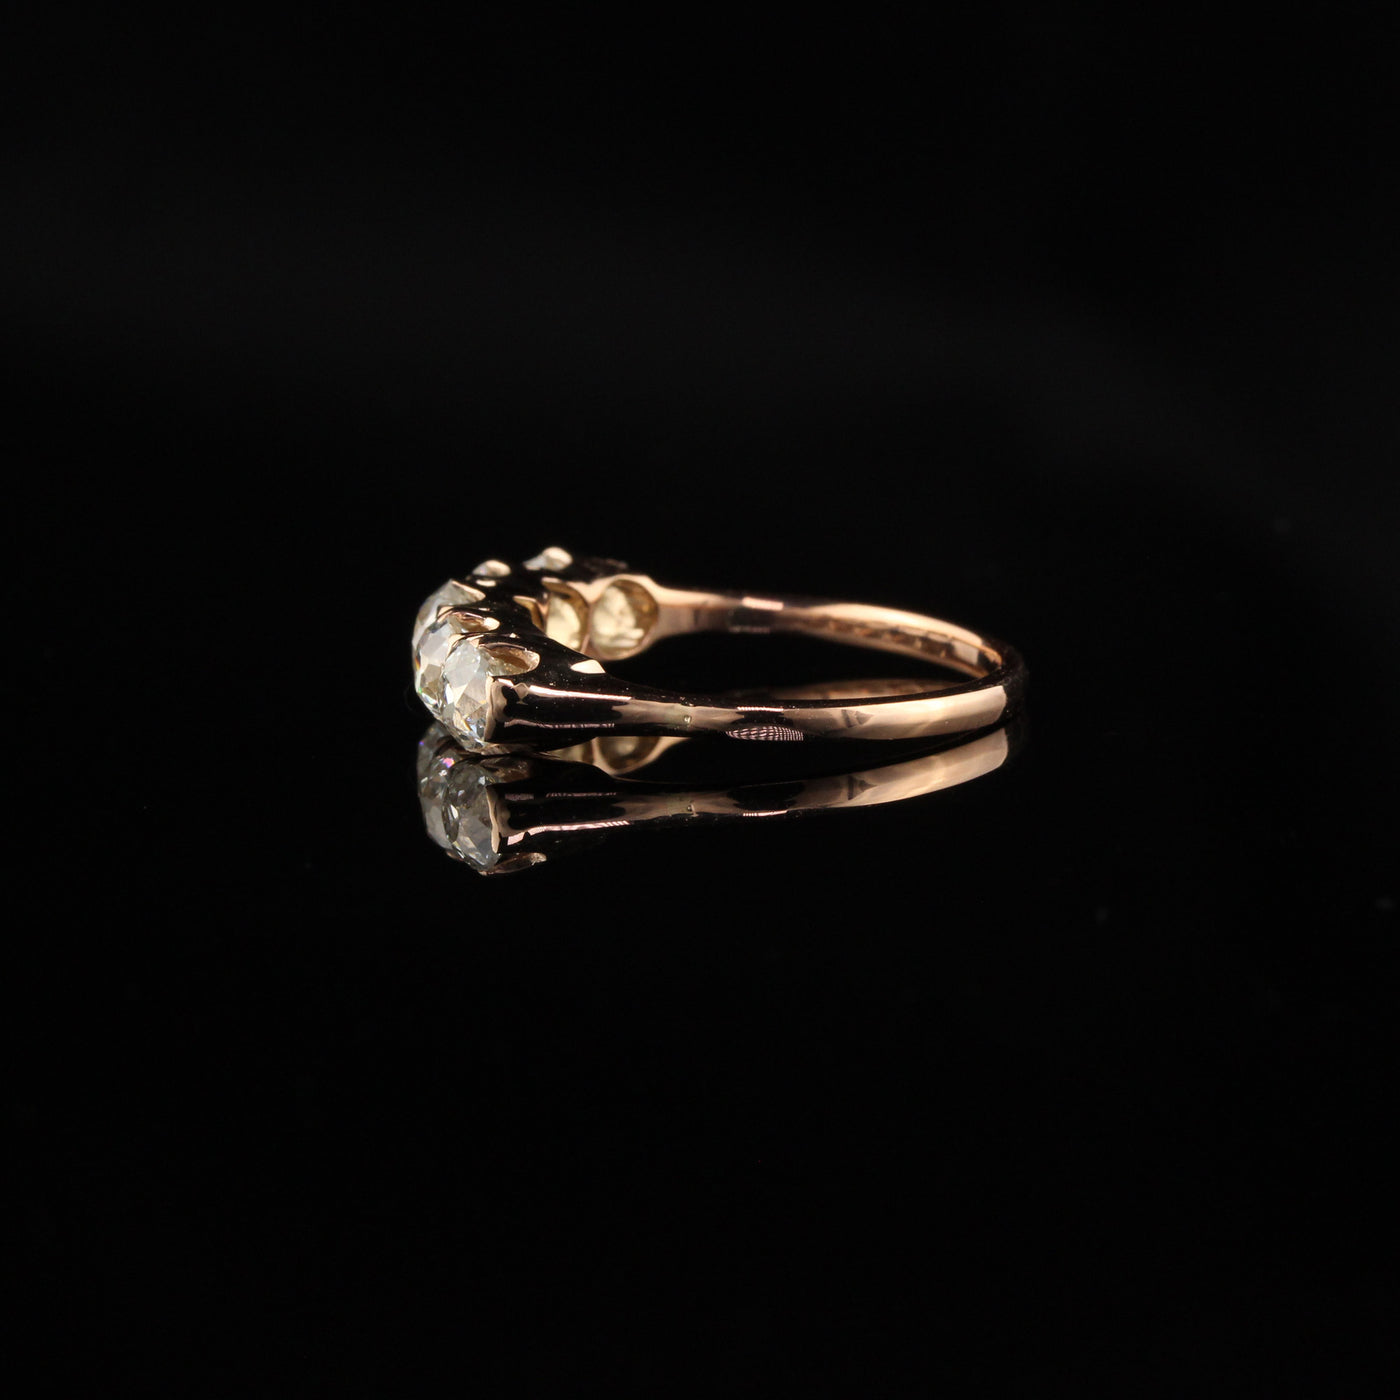 Antique Victorian 18K Rose Gold Old Mine Cut Diamond Five Stone Ring